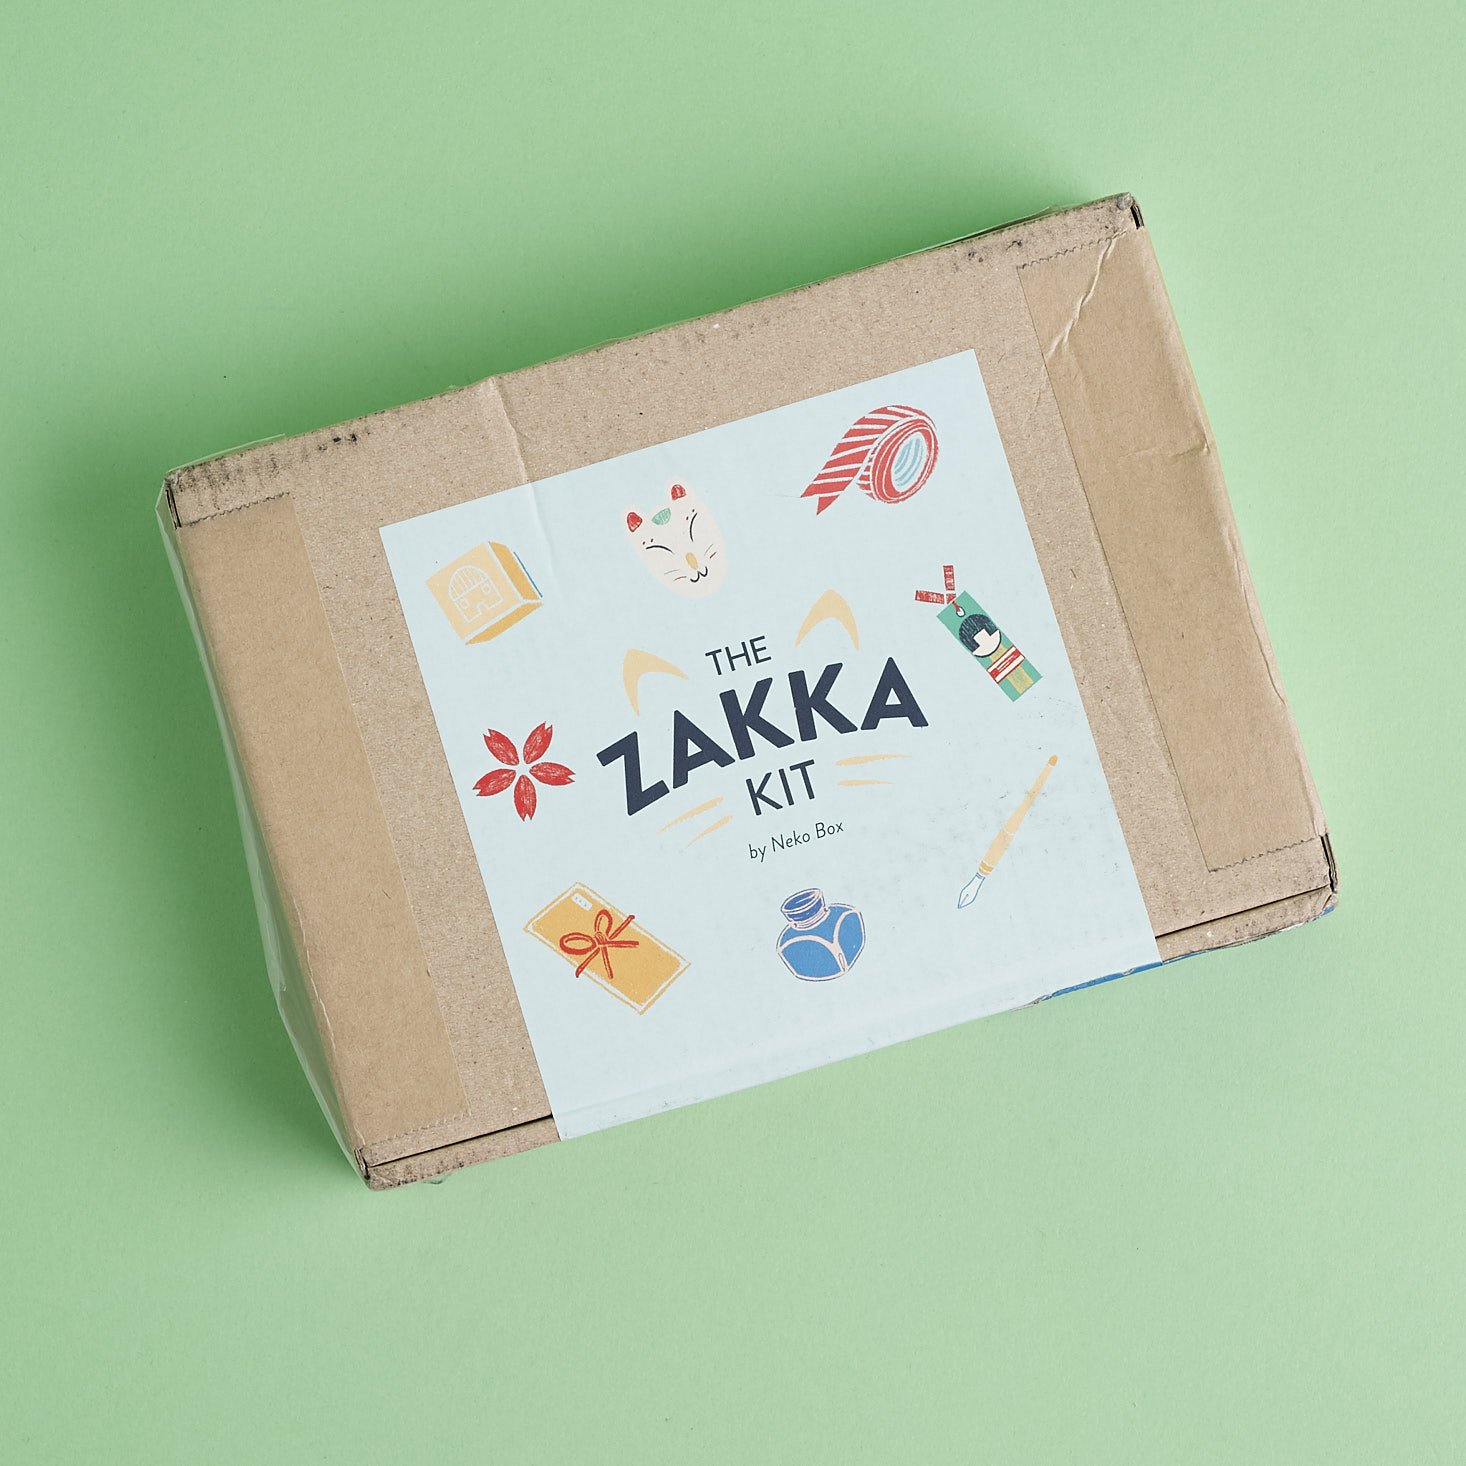 The Zakka Kit Stationery Review + Coupon – May 2018